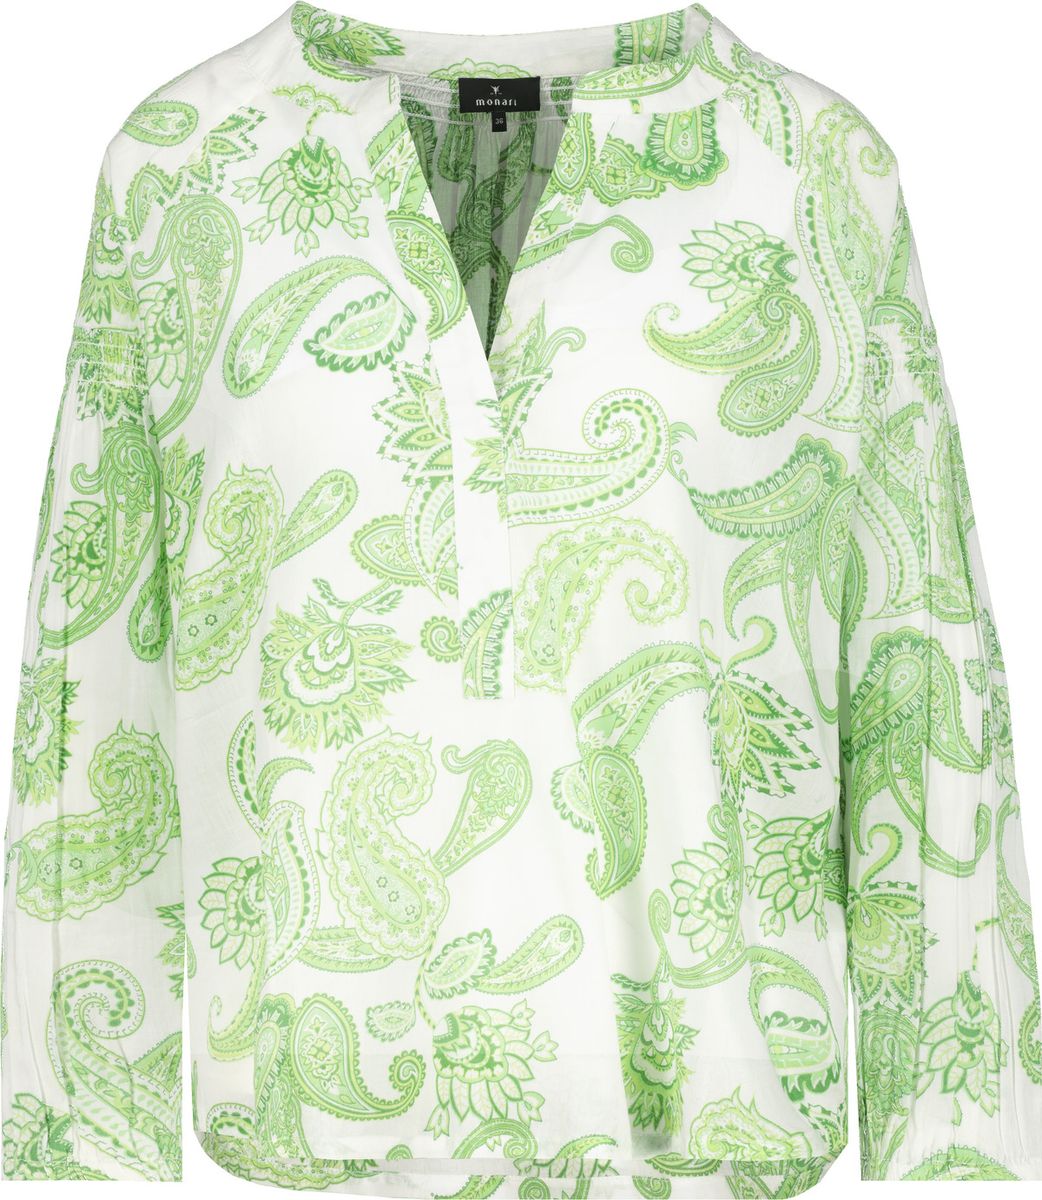 MONARI - Bluse, pastell green gemustert Onlineshop Fahr - Modehaus